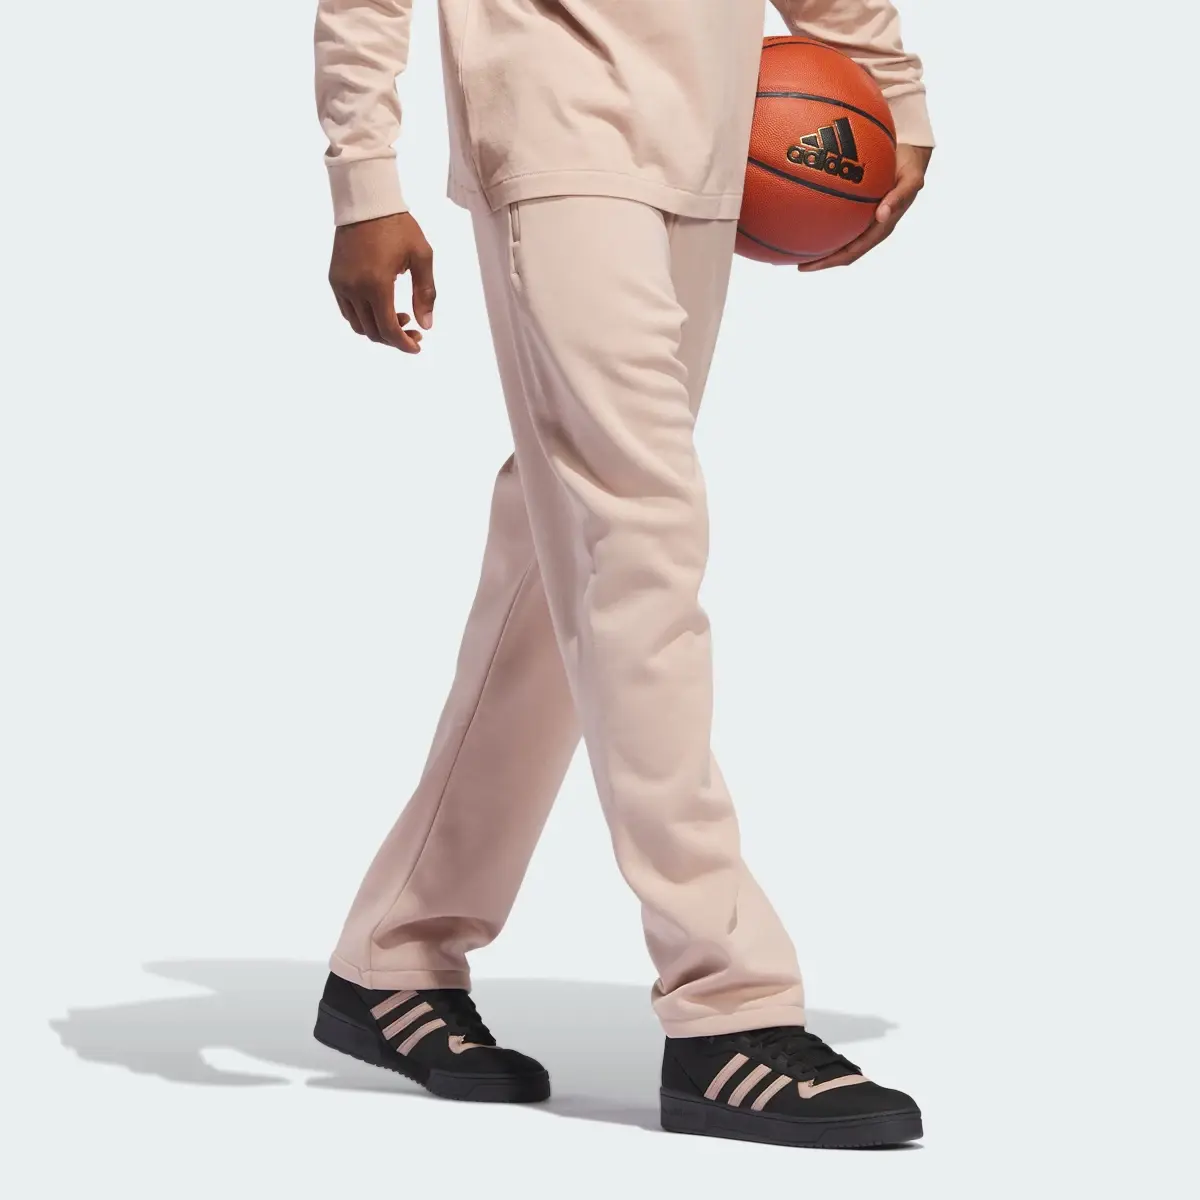 Adidas Basketball Sweatpants. 3